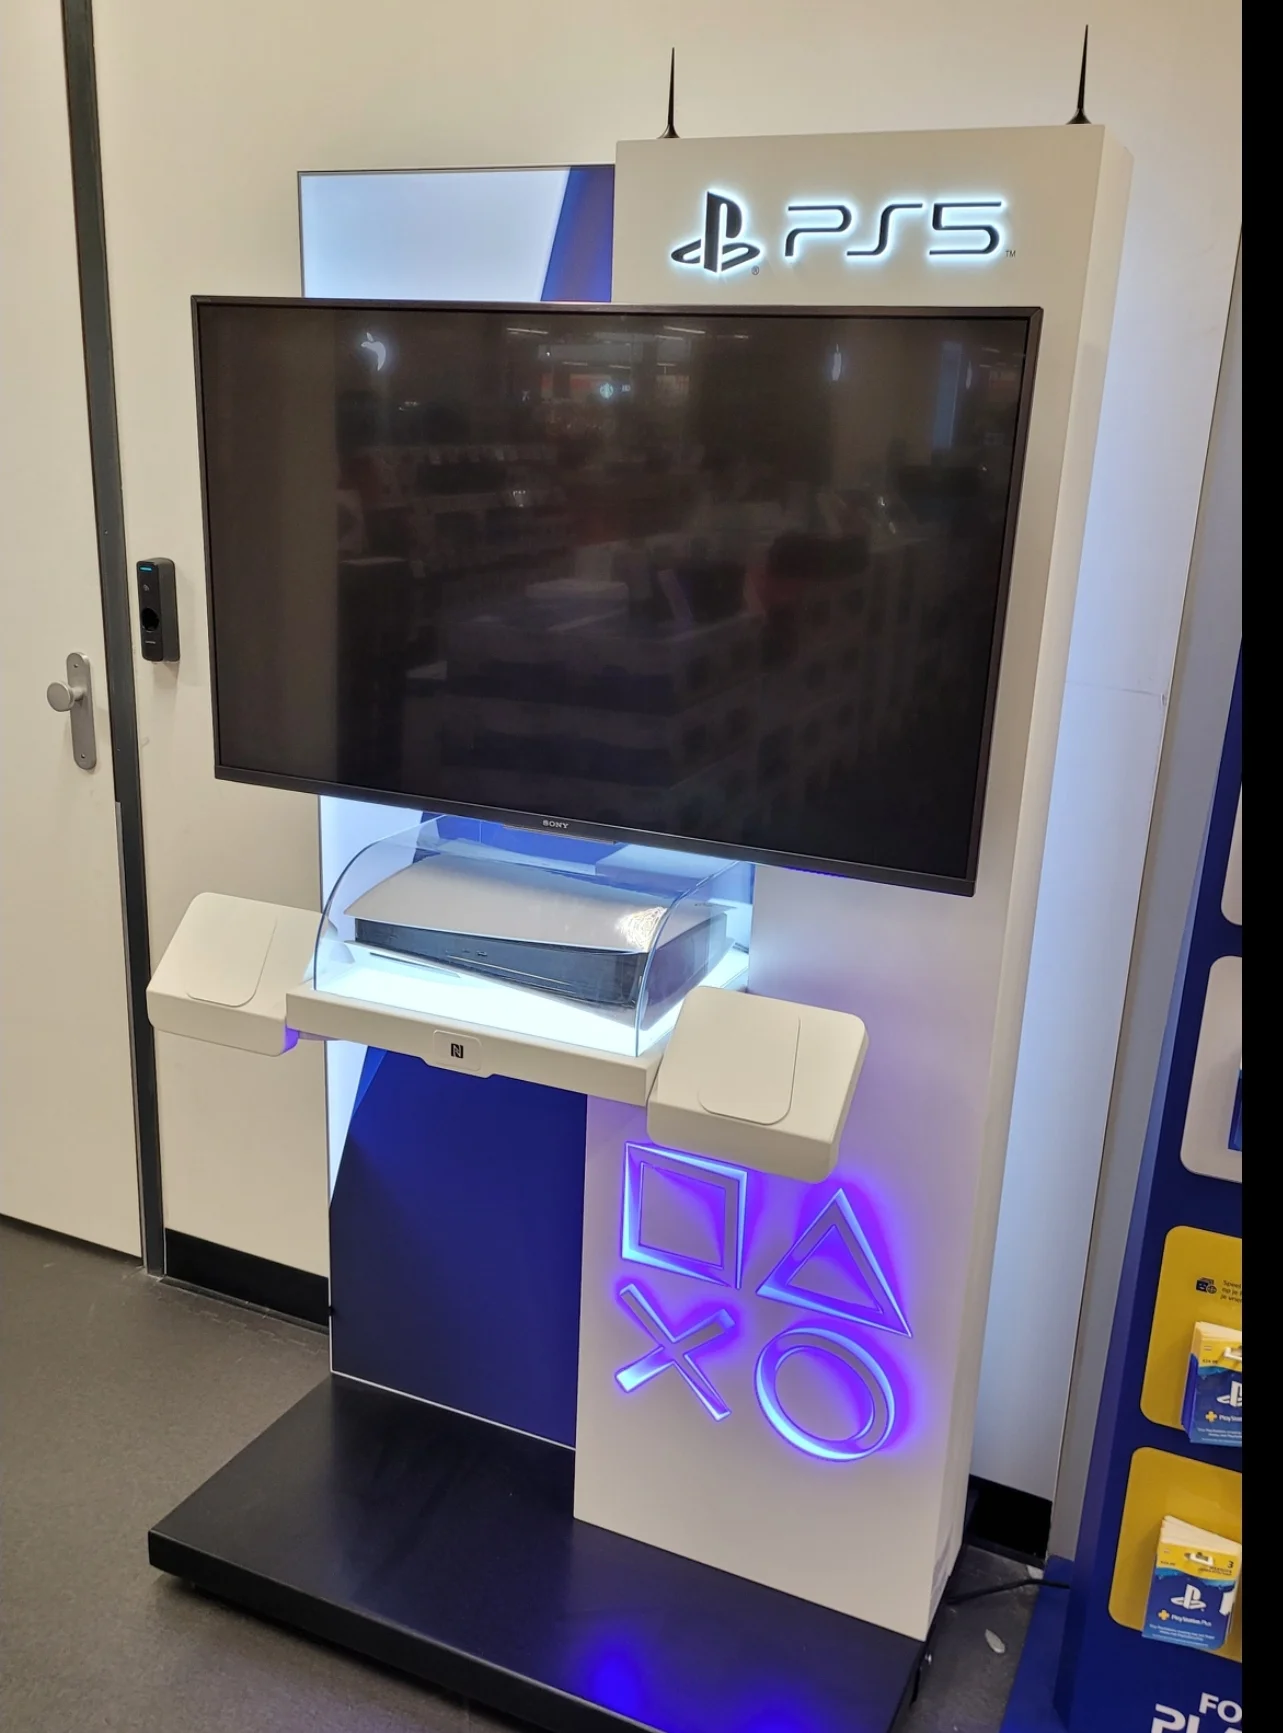  Sony PlayStation 5 Kiosk [EU]